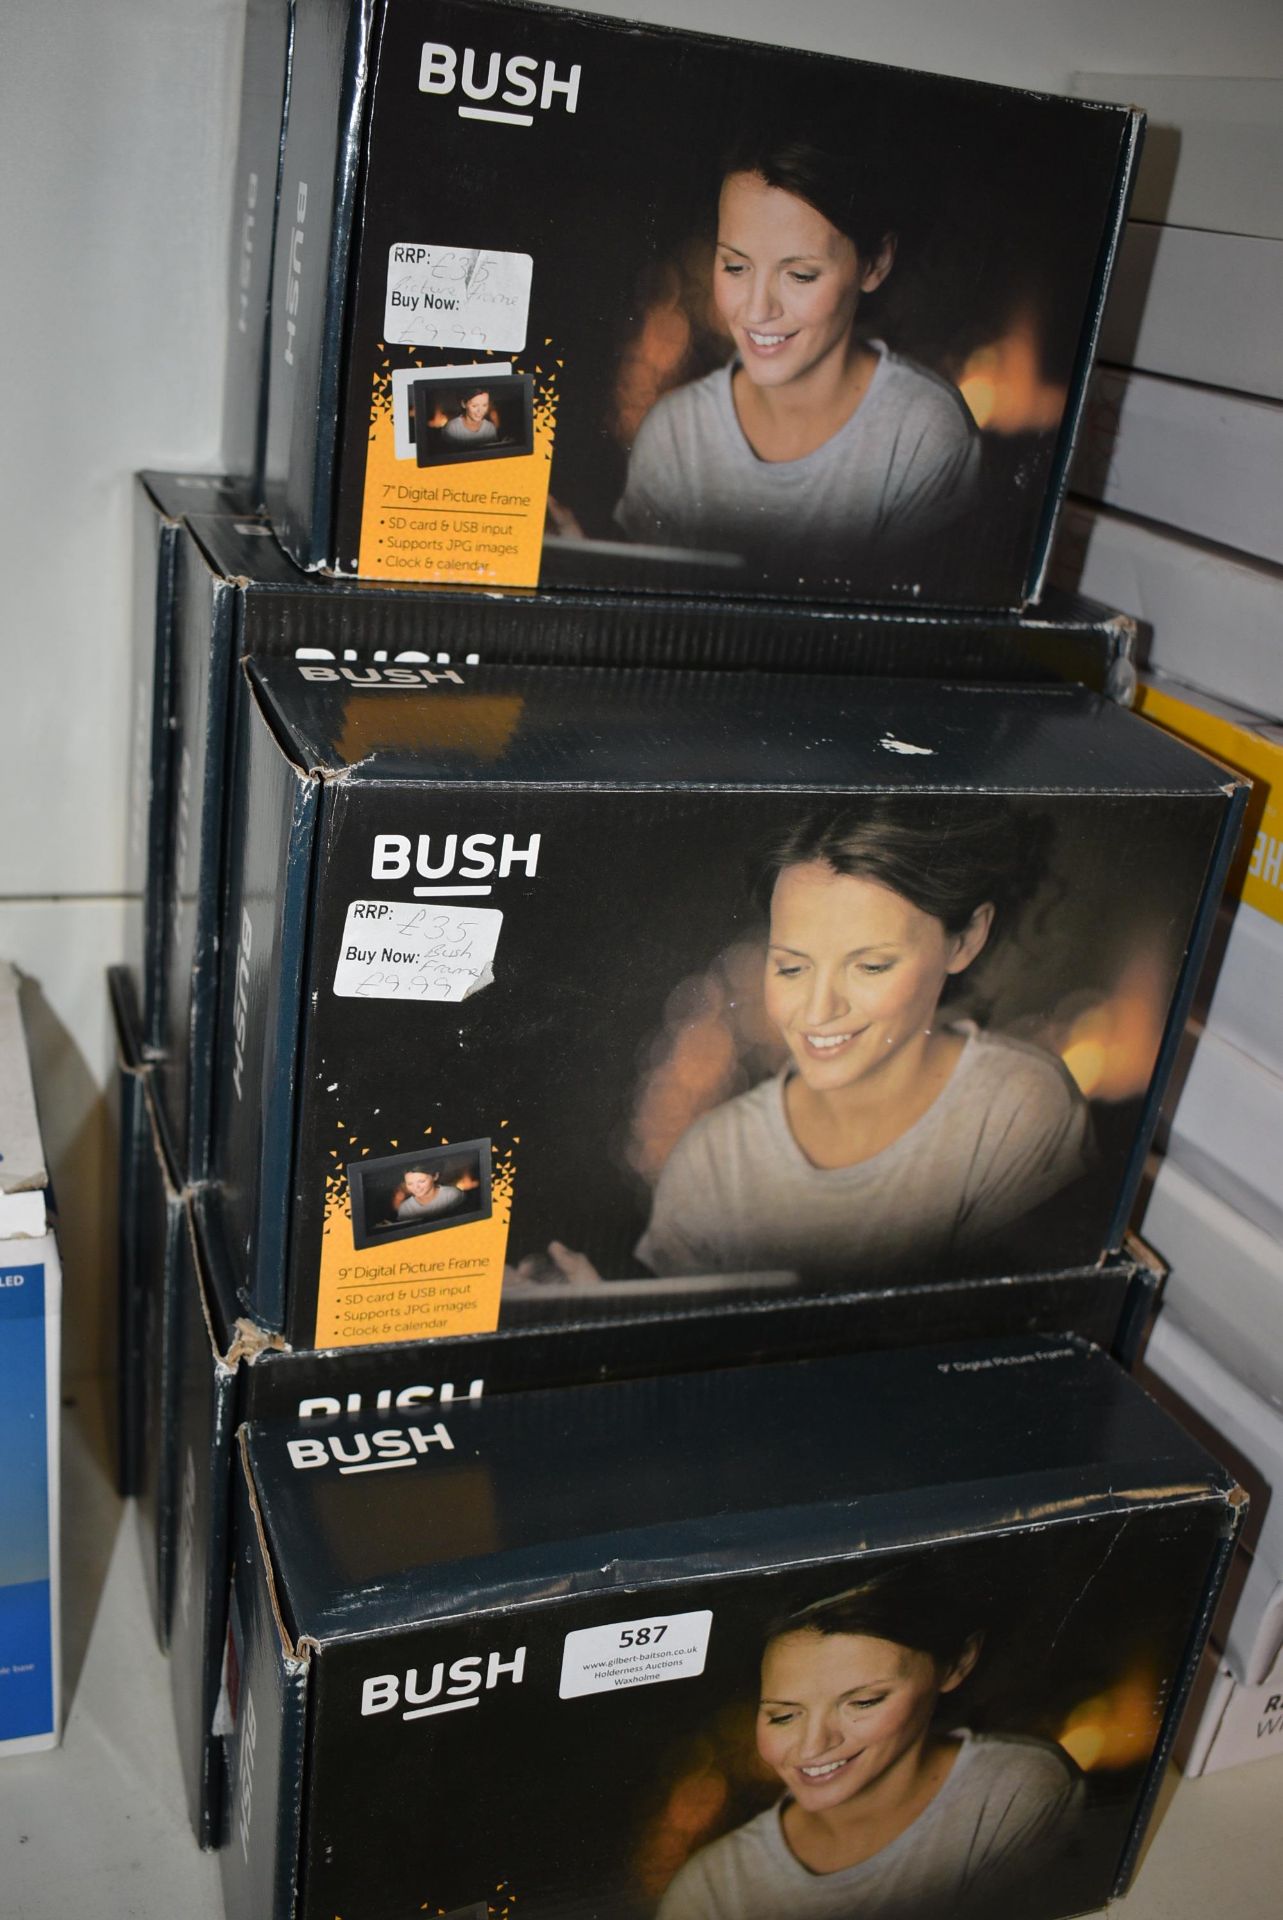 Eight Bush 9” Digital Picture Frames